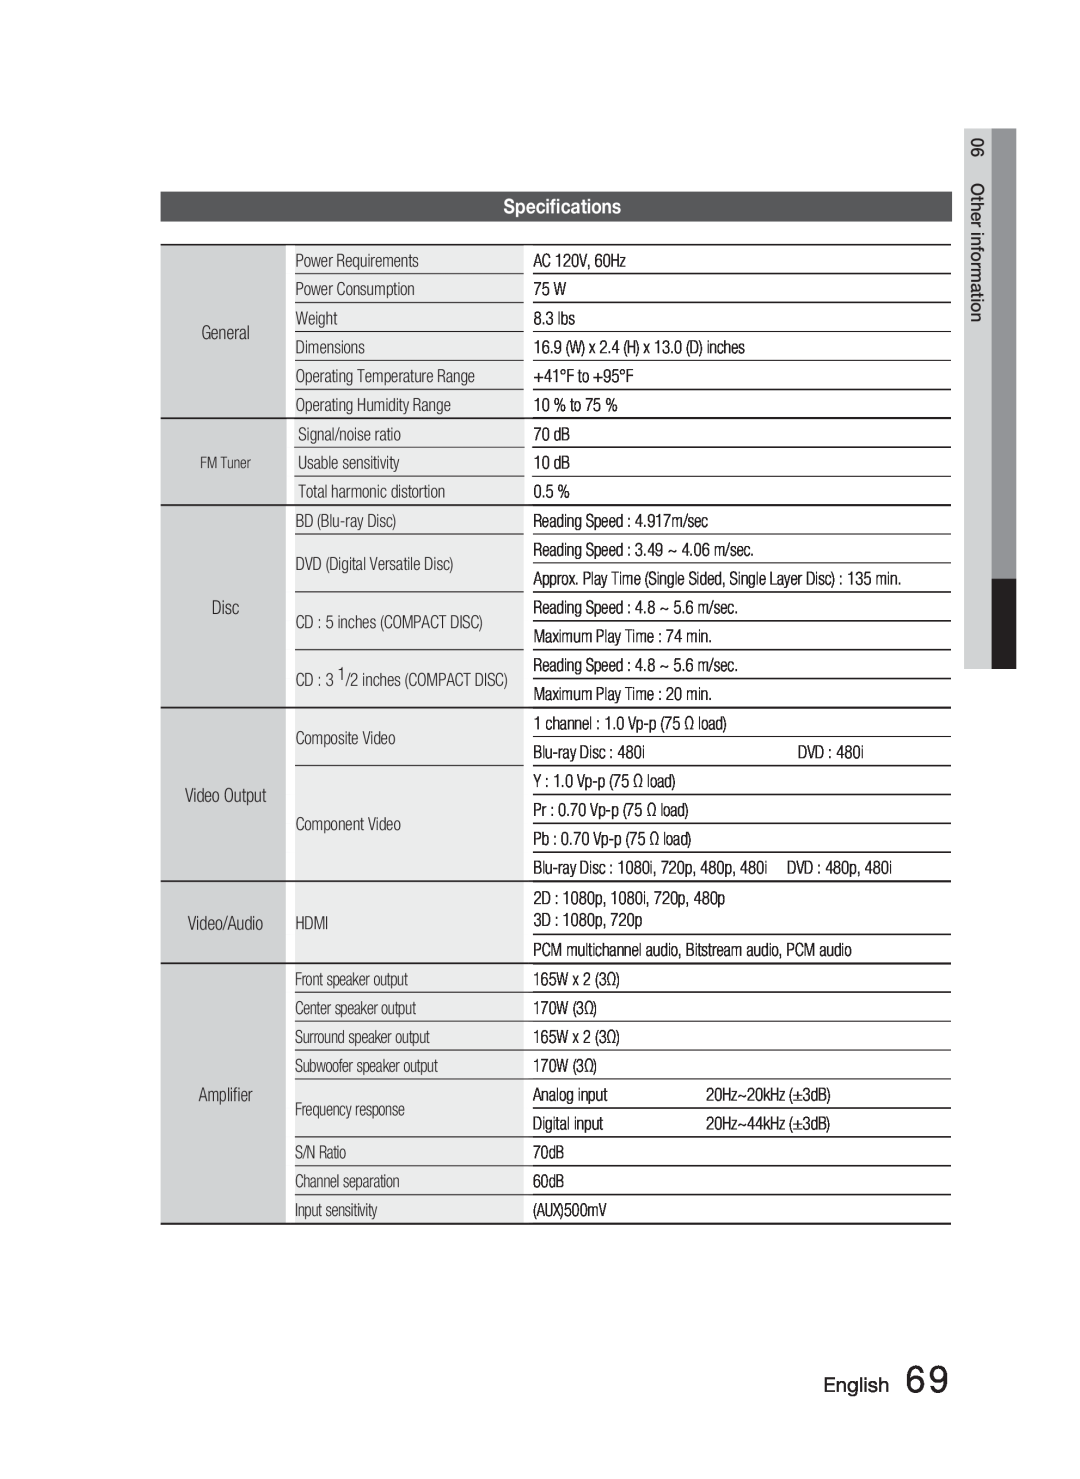 Samsung AH68-02279R user manual Speciﬁcations, English 